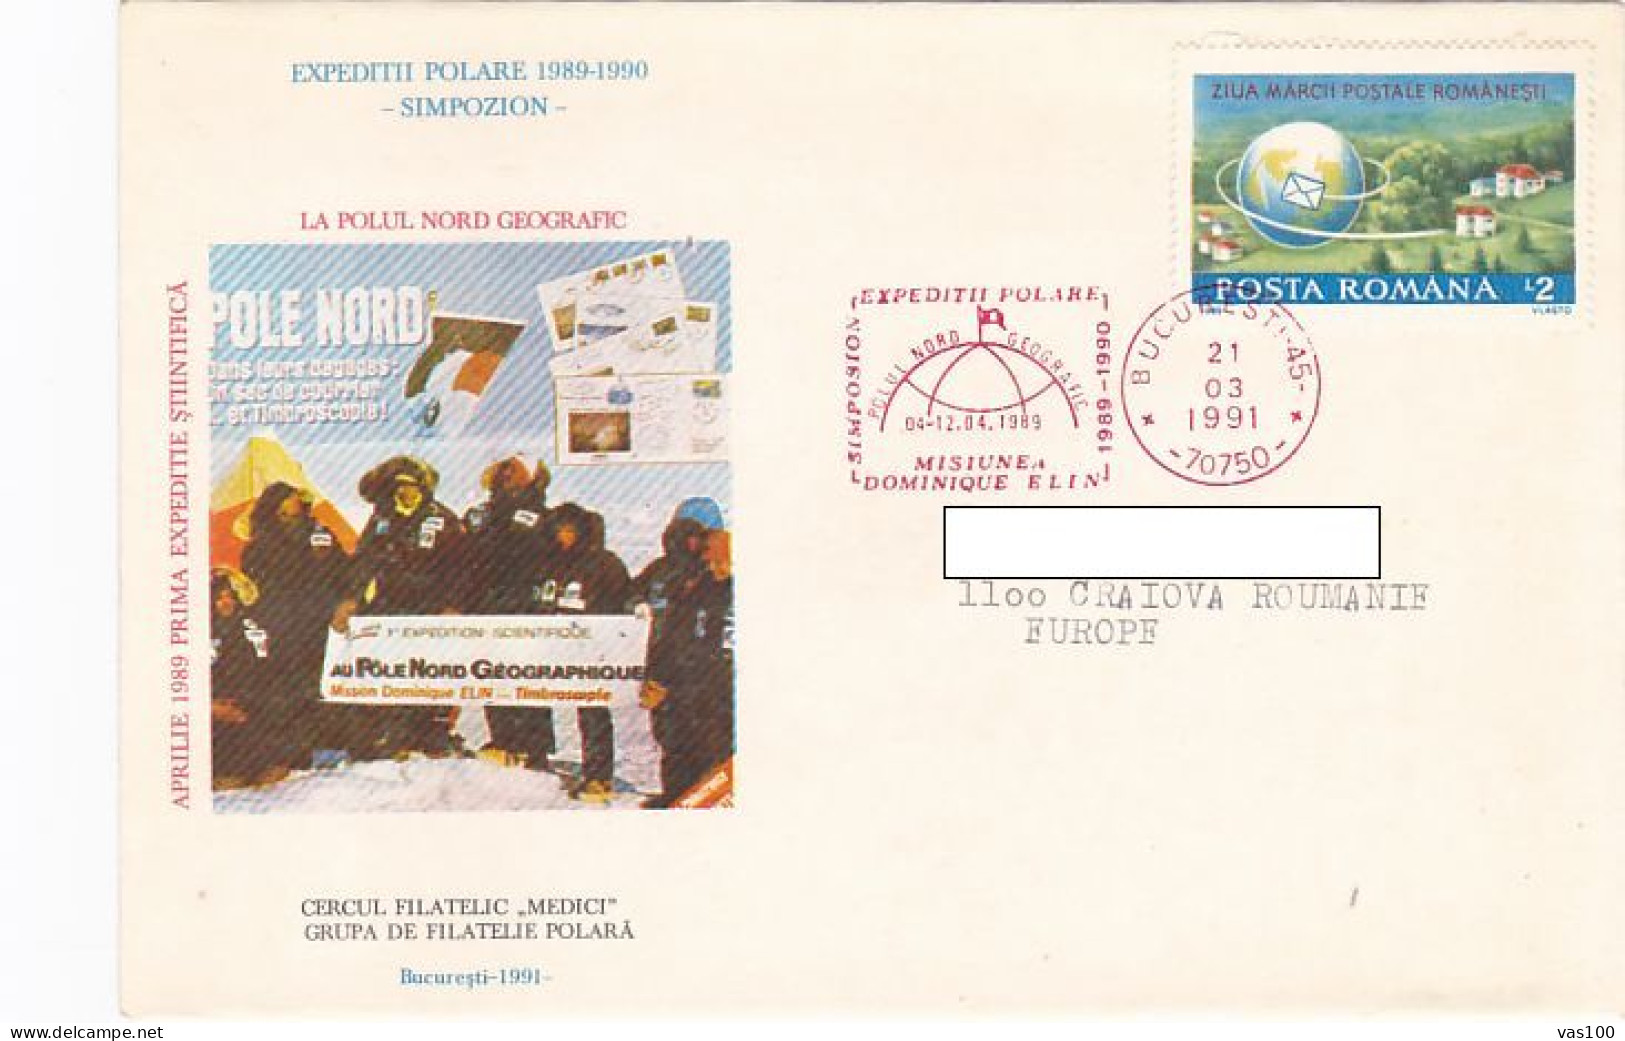 NORTH POLE, ARCTIC EXPEDITION, DOMINIQUE ELIN AT NORTH POLE, SPECIAL COVER, 1991, ROMANIA - Arctic Expeditions